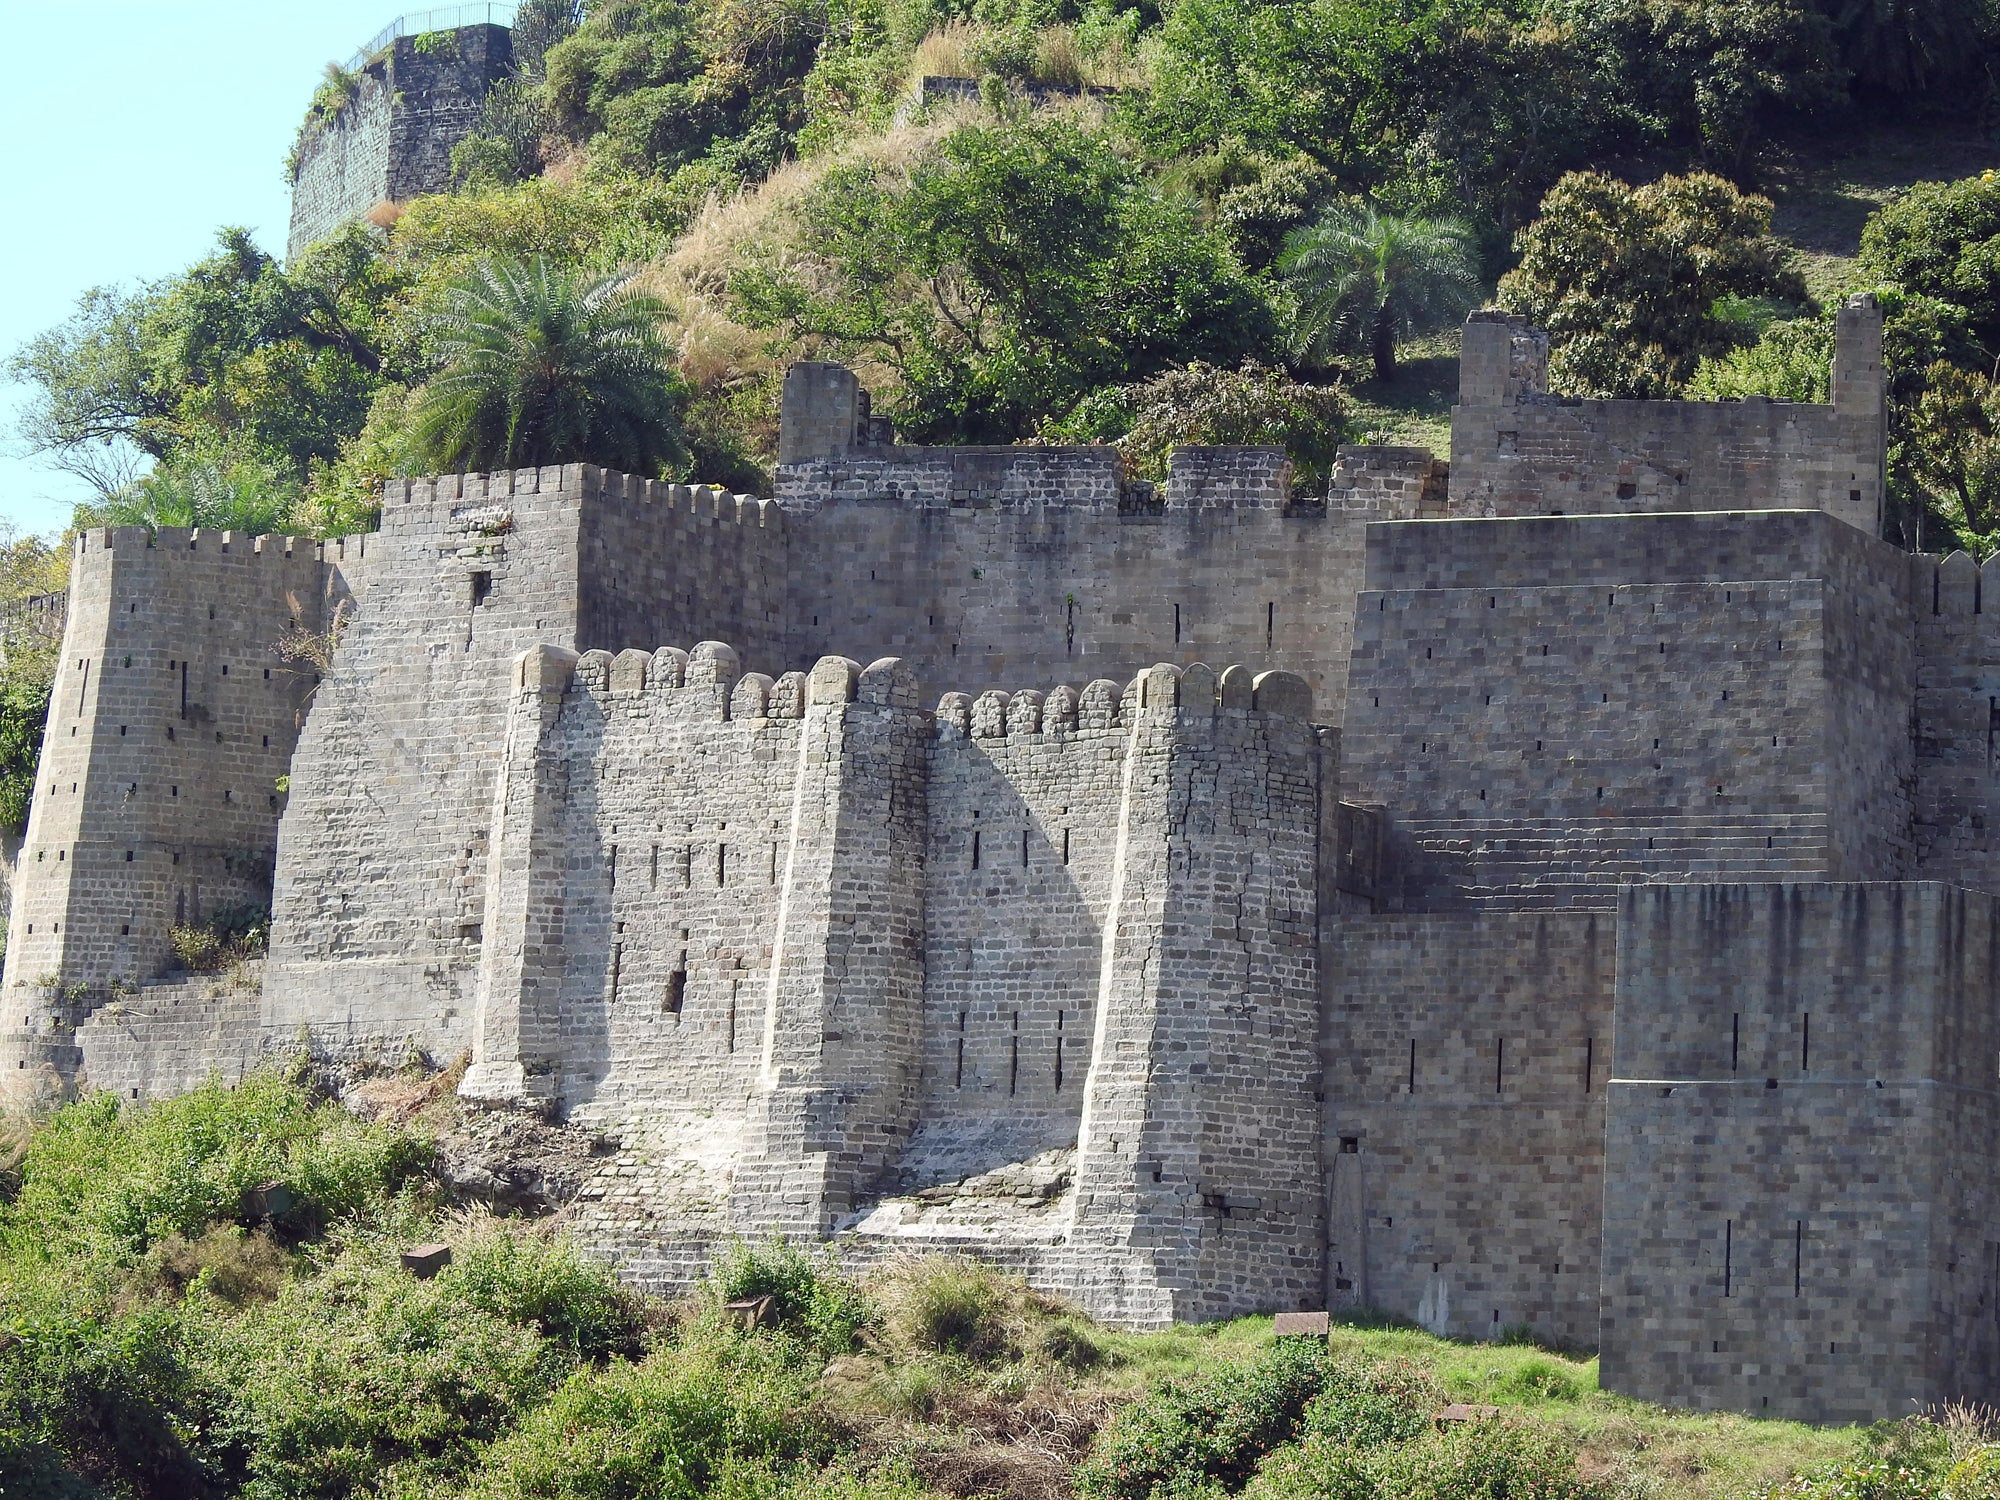 Nagarkot Fort